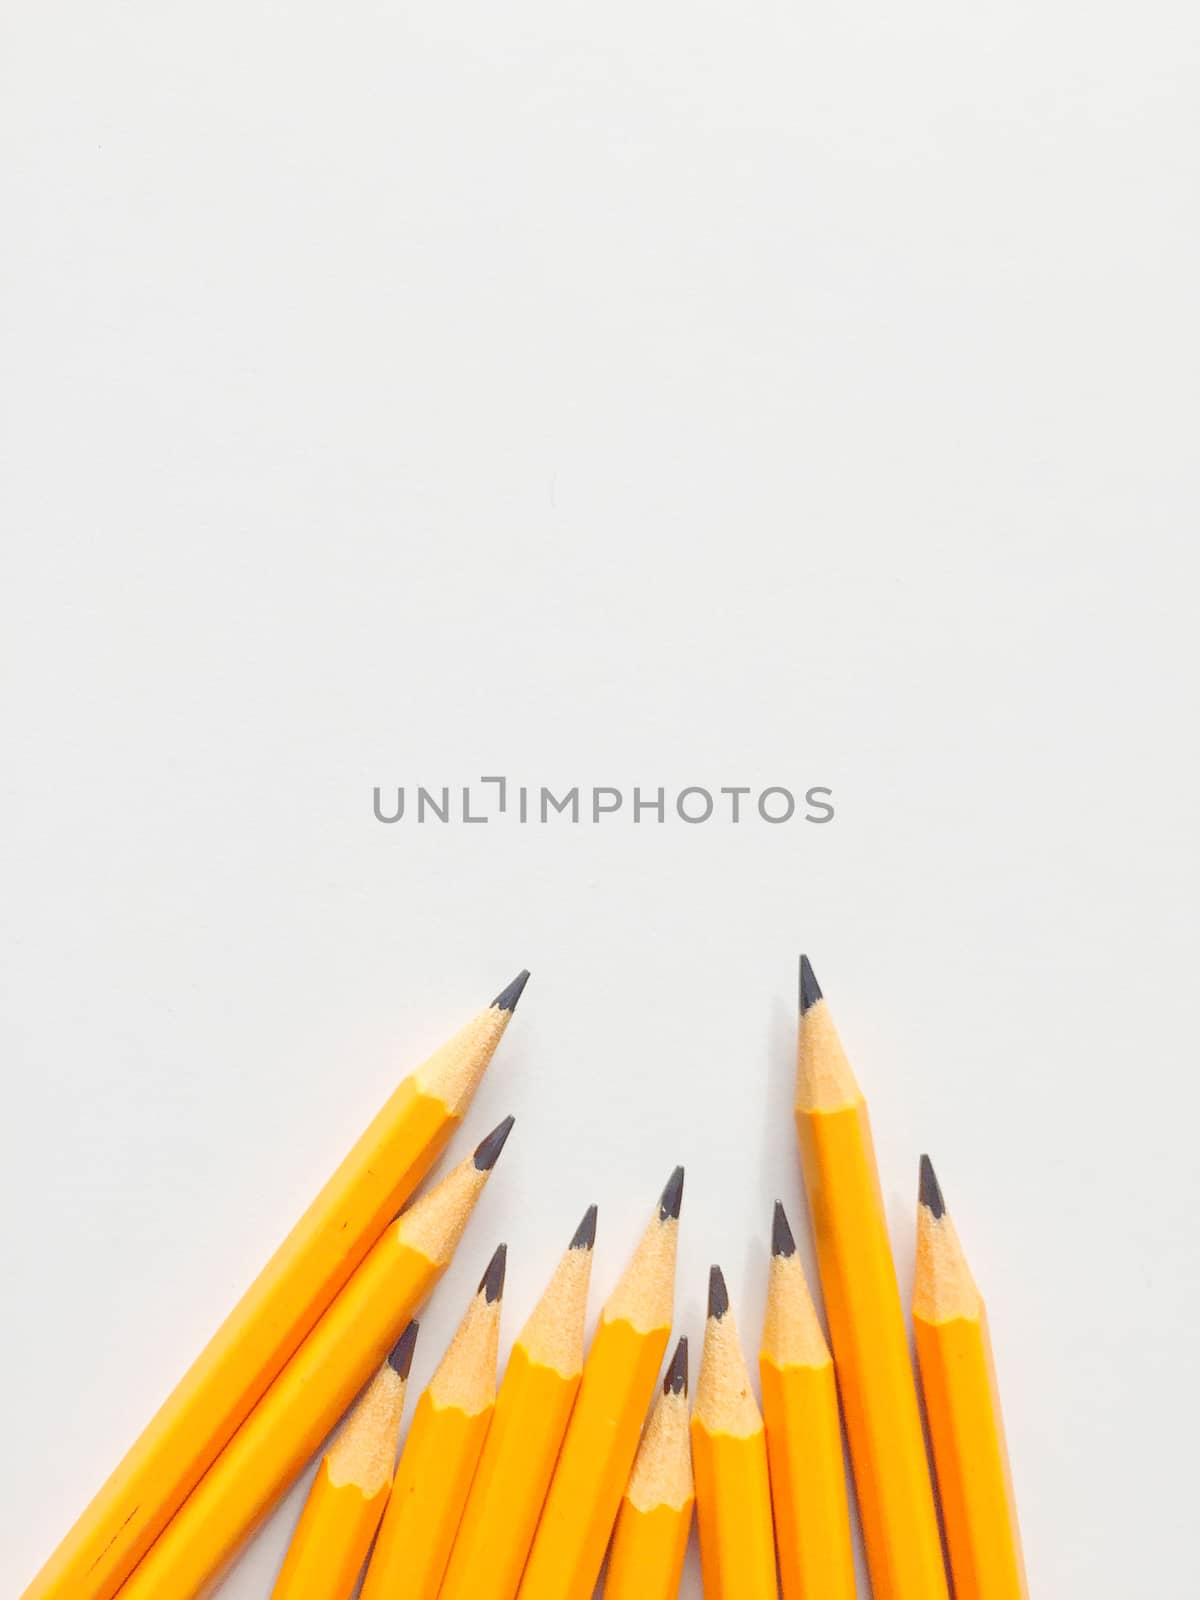 Group of yellow pencils by rarrarorro